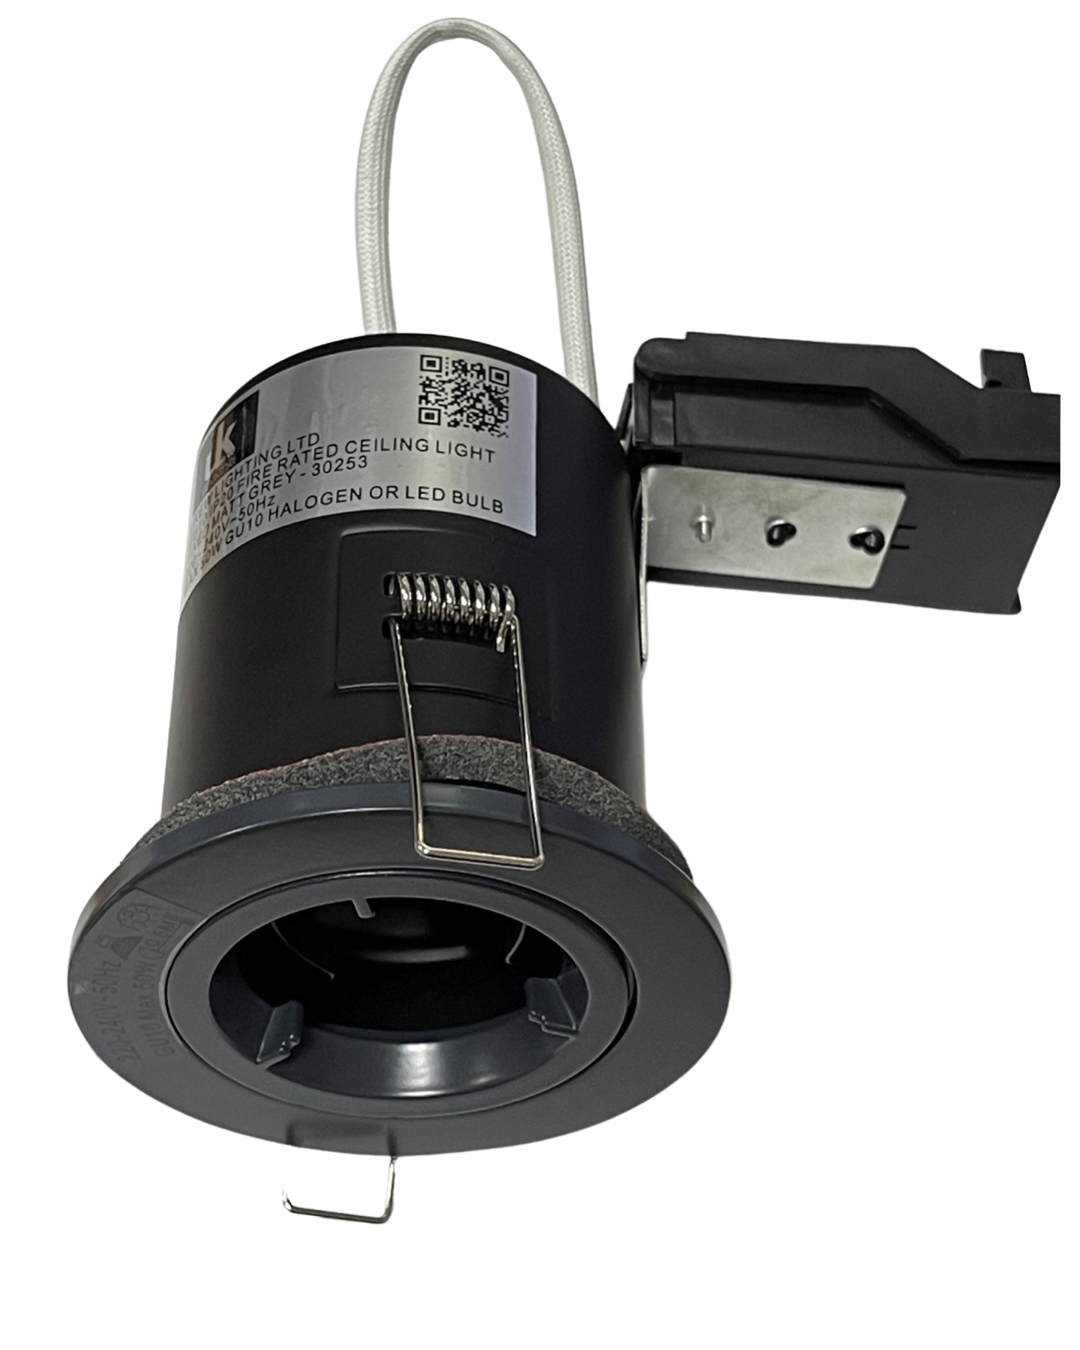 GU10 Fire Rated Round Recessed Ceiling Twist Lock fix Downlight - grey Lock & Lock